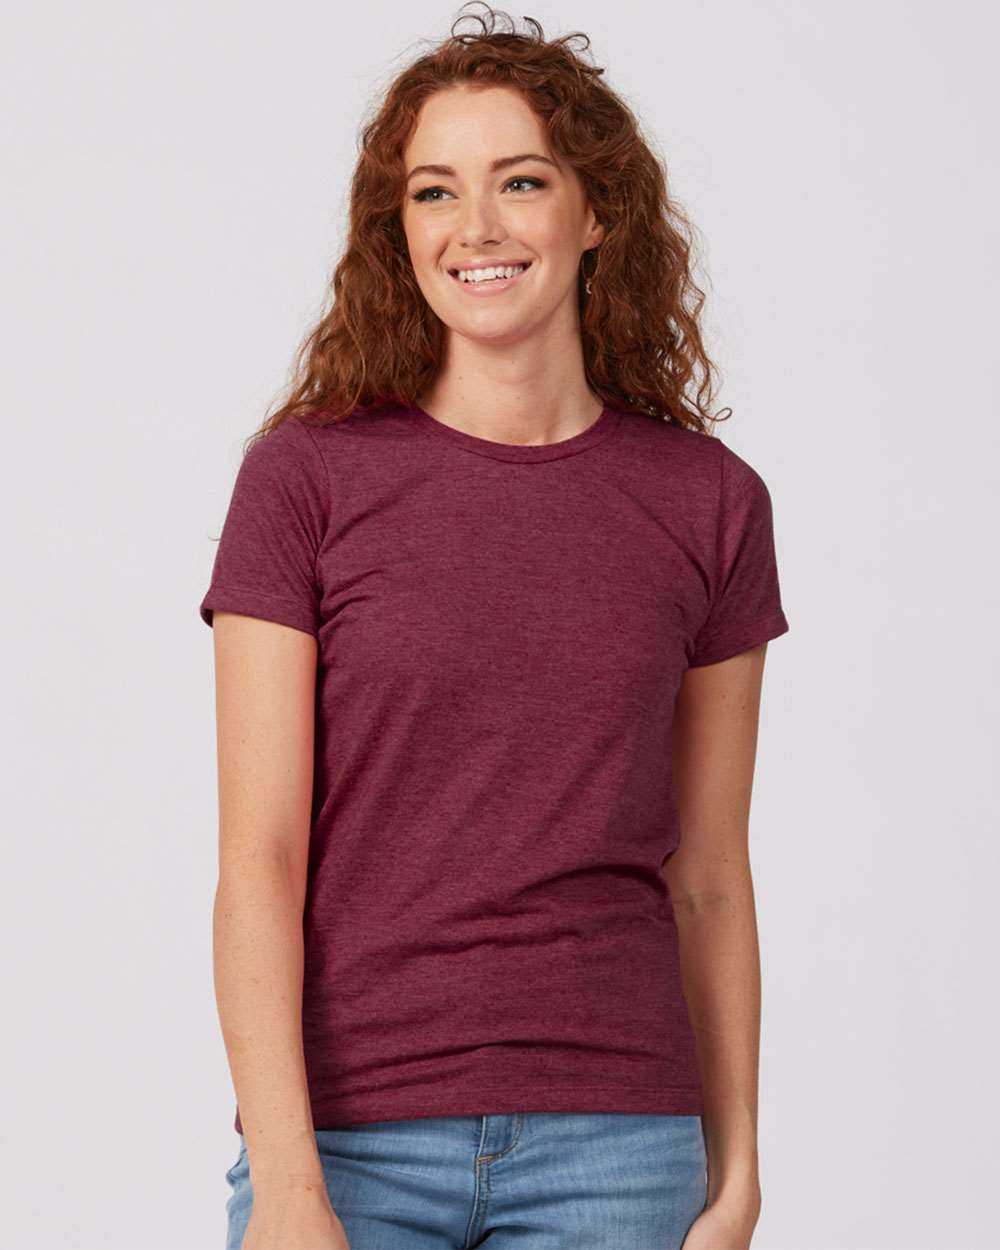 Tultex 542 Women's Premium Cotton Blend T-Shirt - Burgundy Heather - HIT a Double